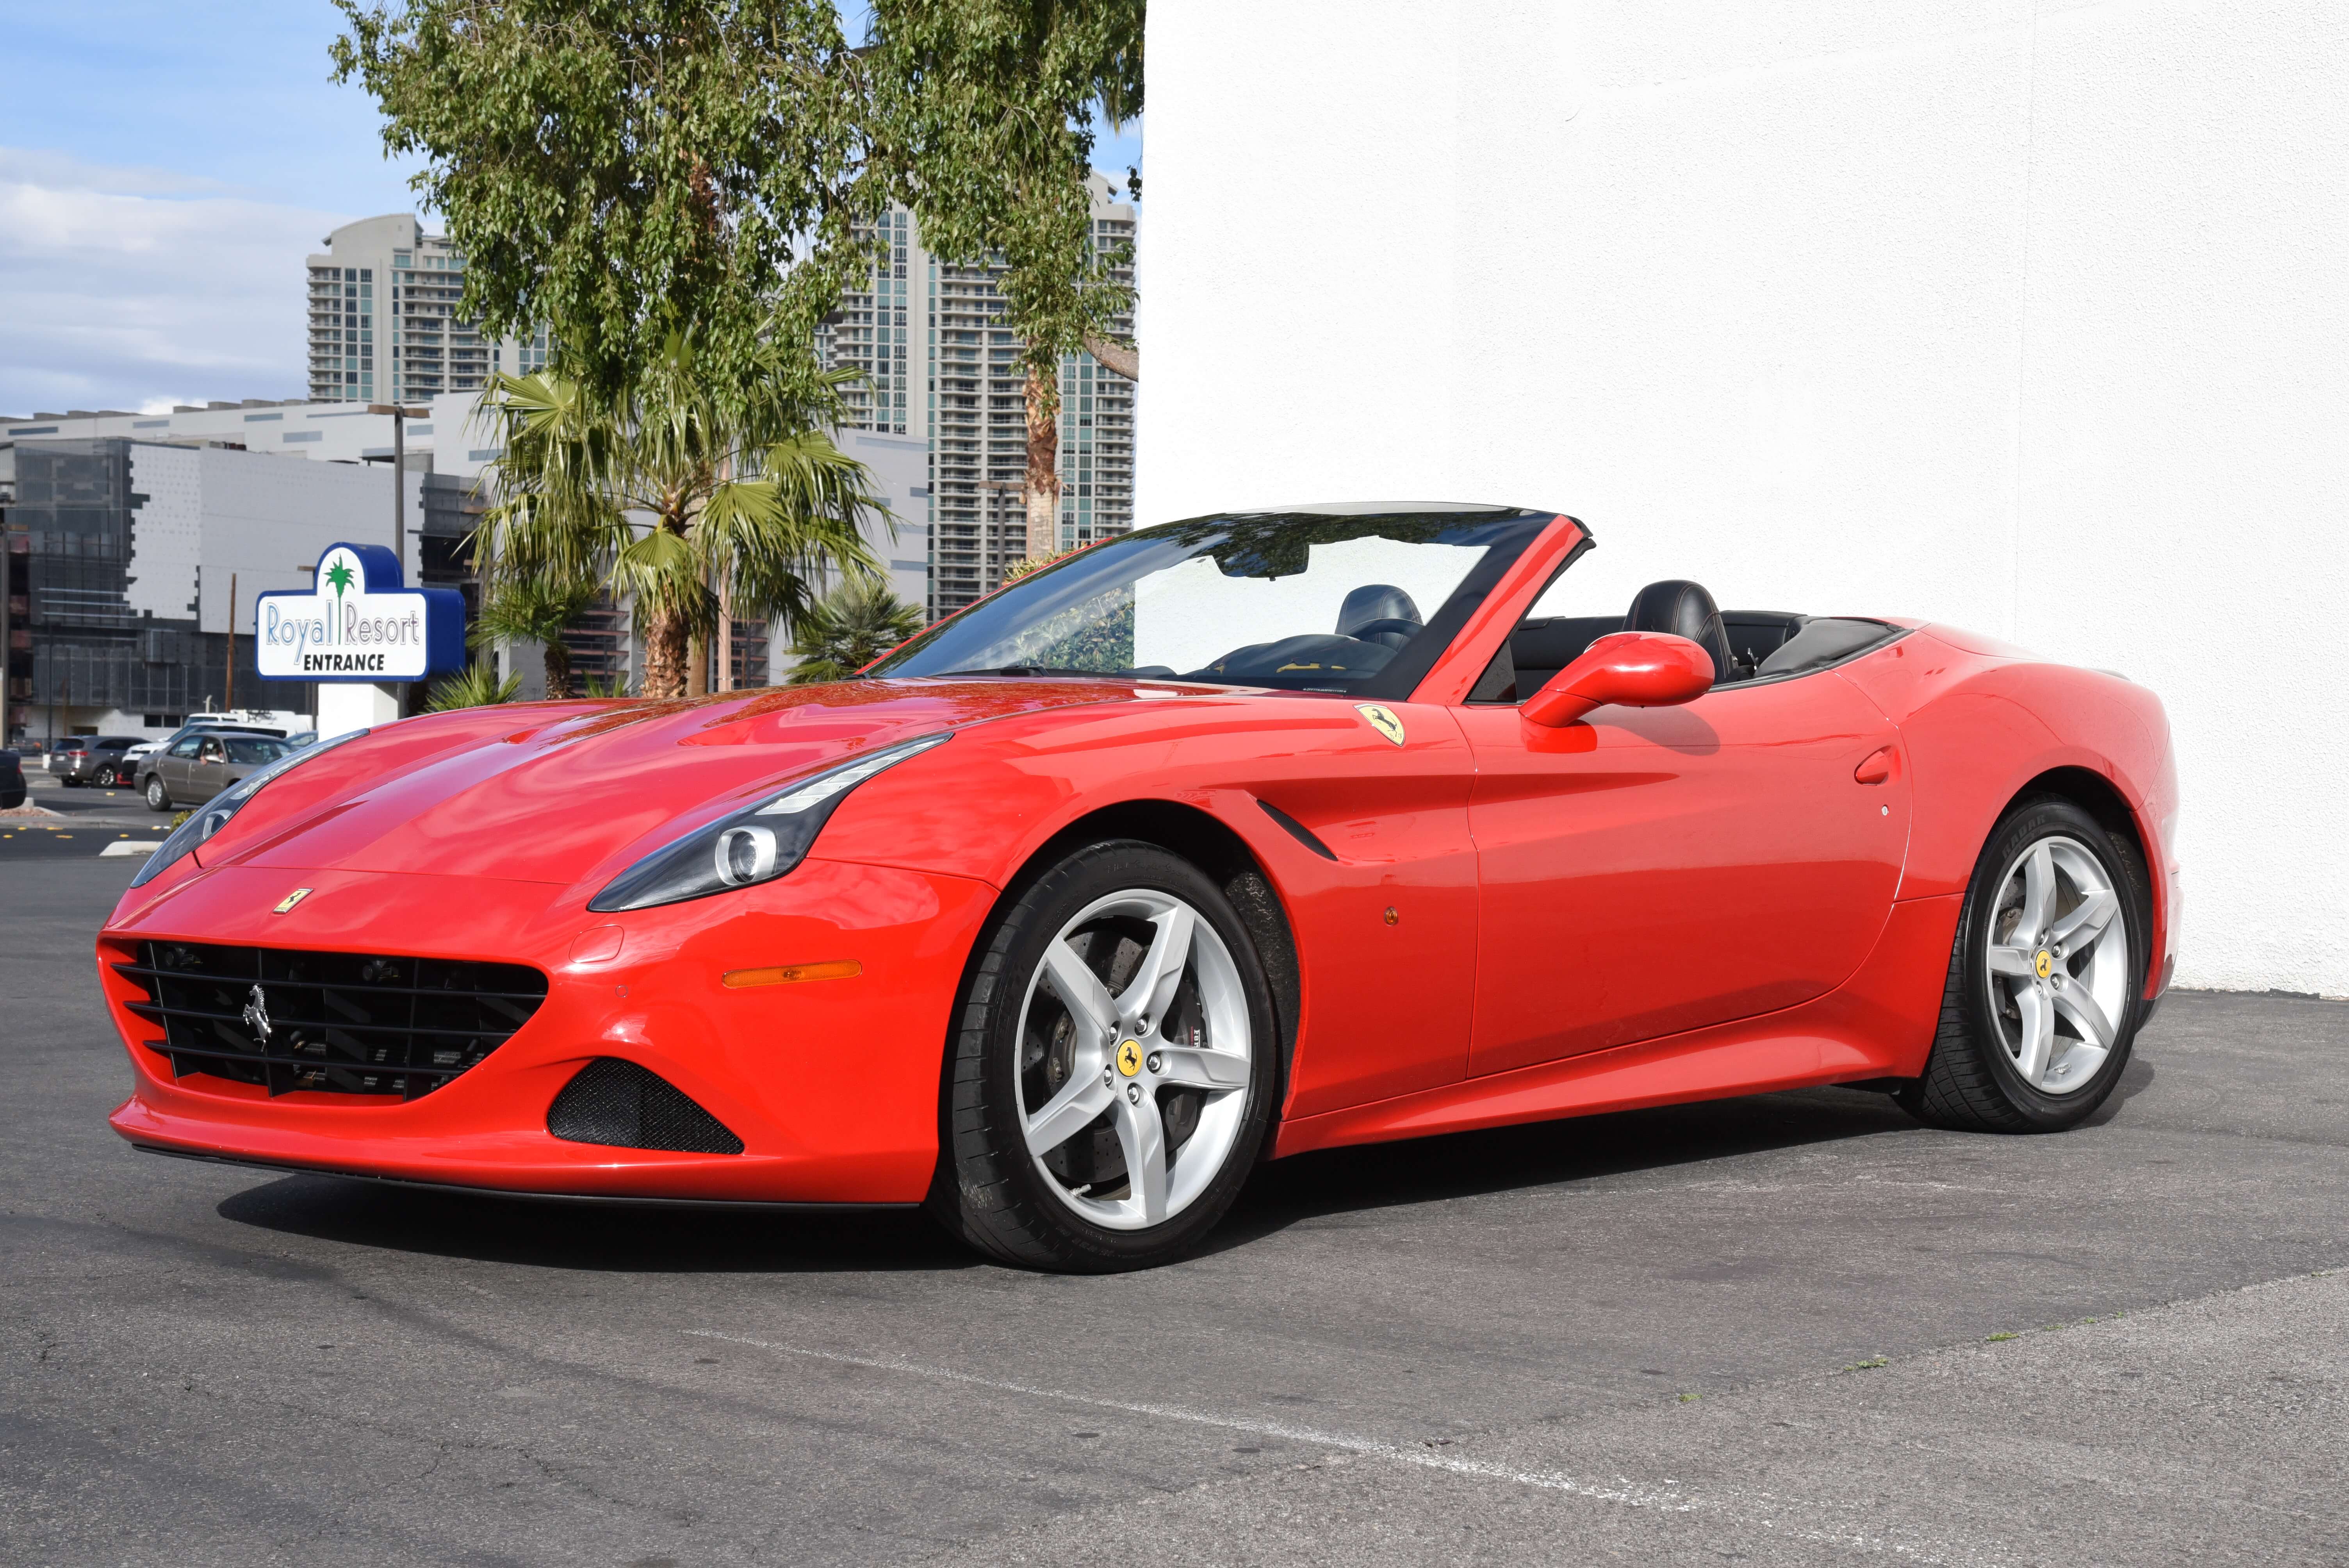 Ferrari Convertible California Photos - That Cham Online